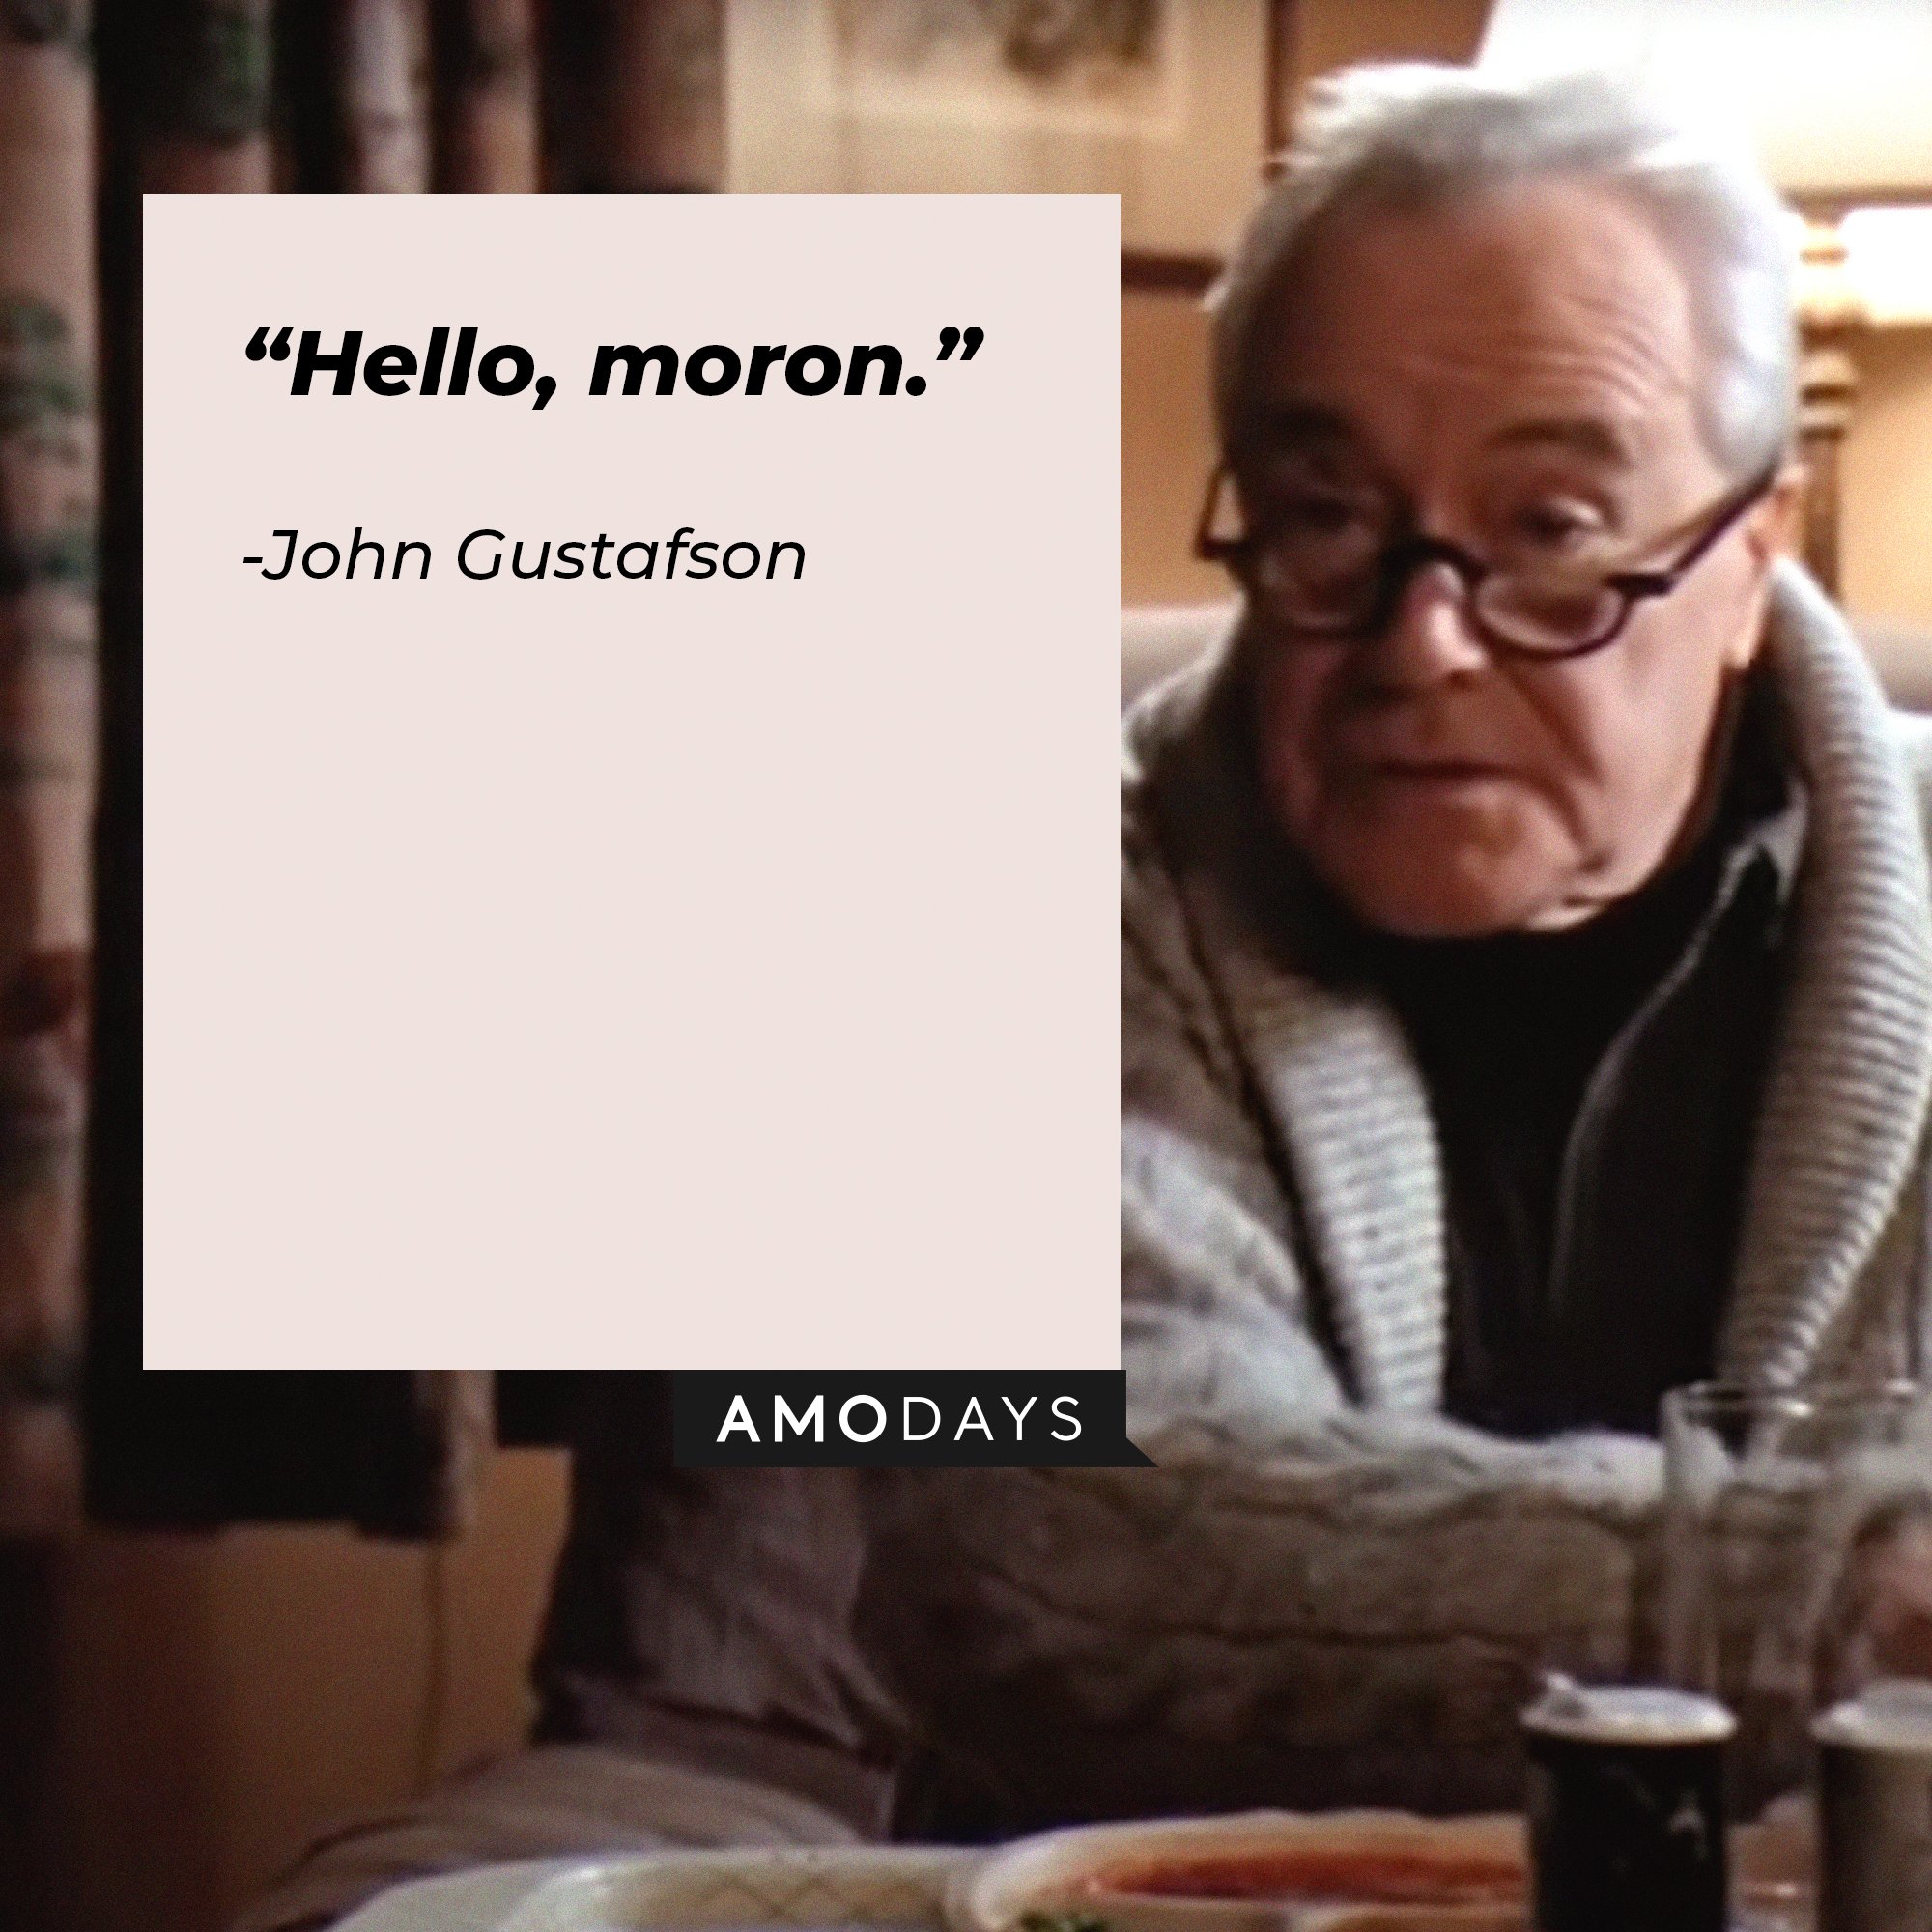  John Gustafson’s quote: “Hello, moron.” | Image: AmoDays